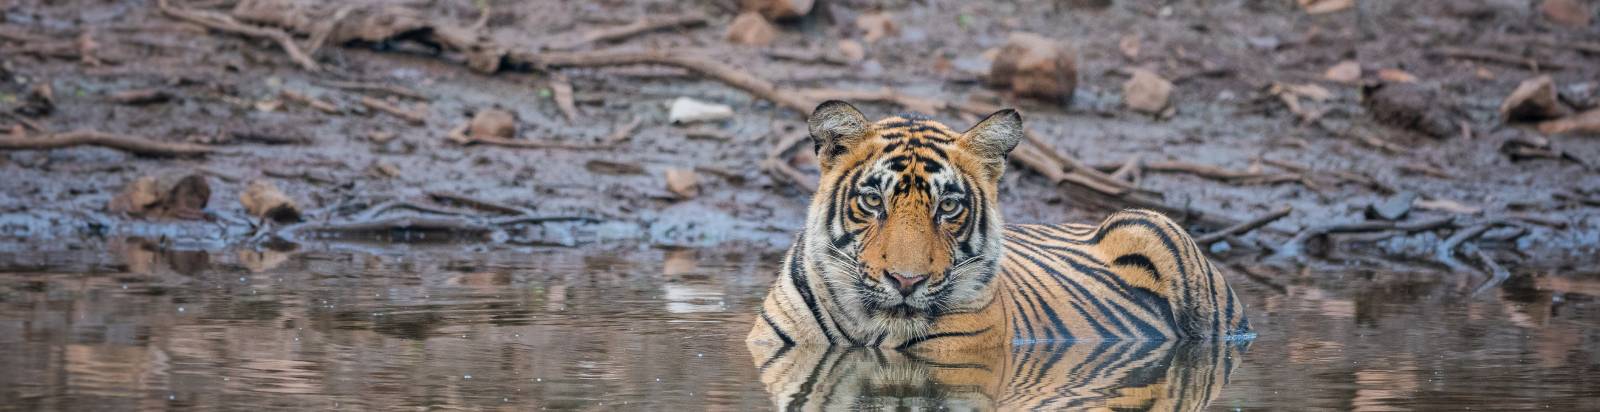 Popular National Parks & Tiger Reserves in India